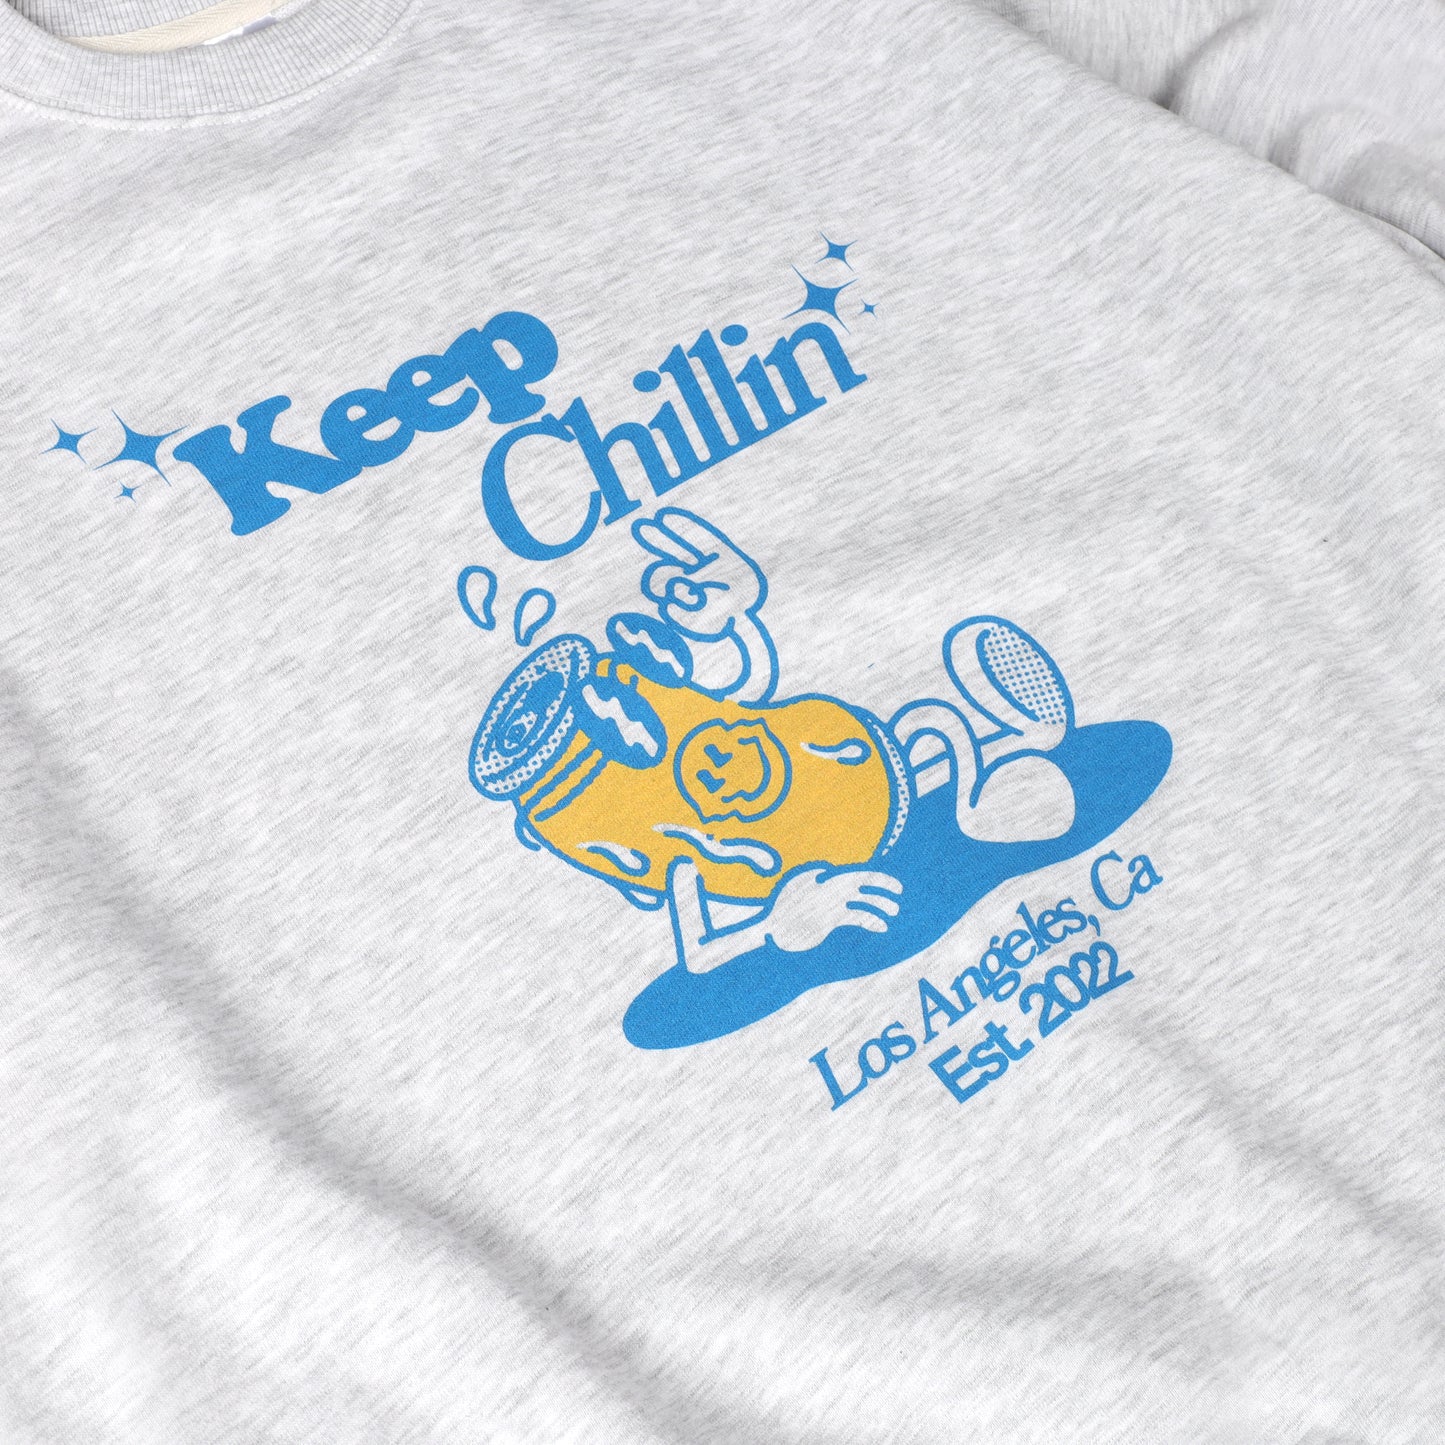 Keep Chillin Sweatshirt Designed by JT